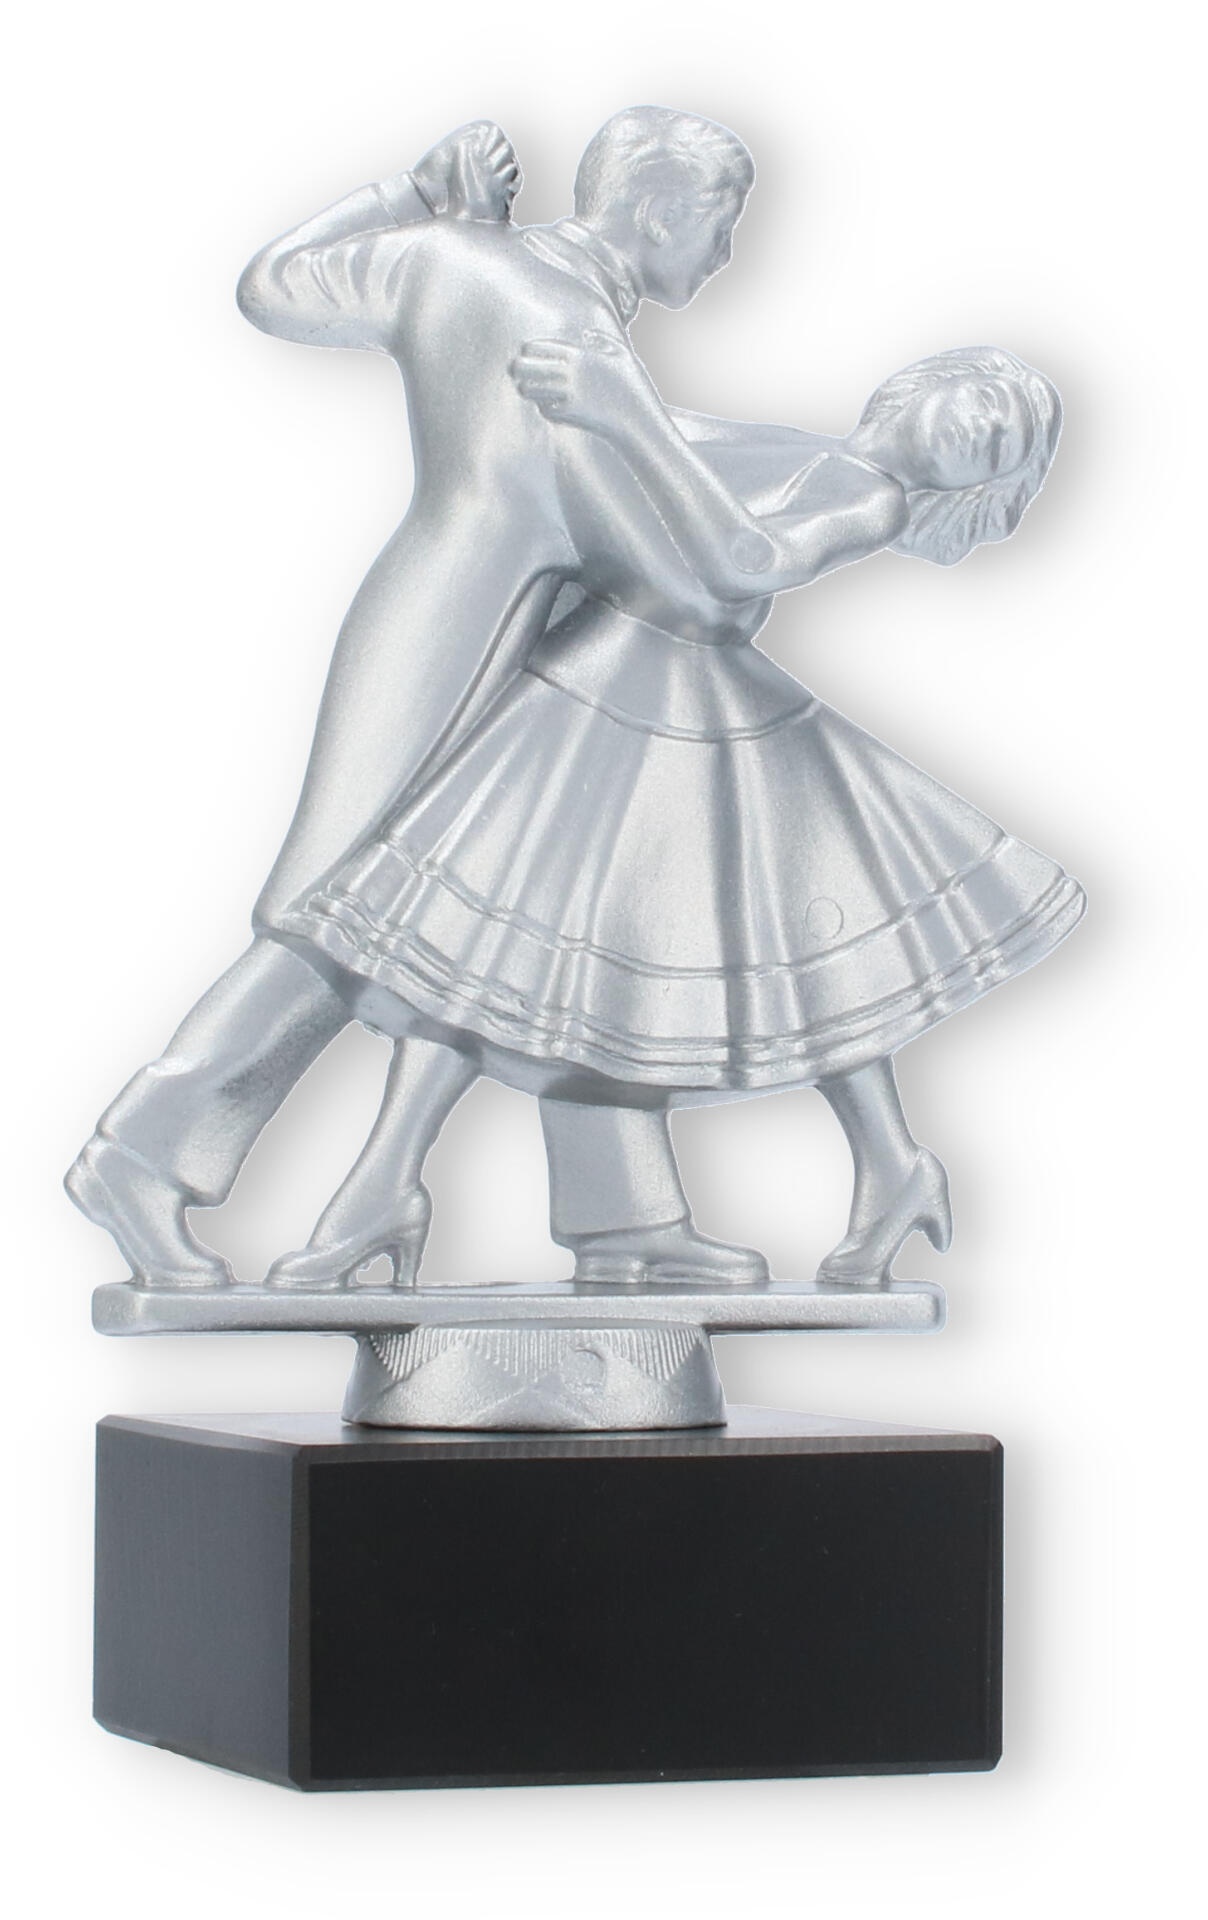 Pokal Metallfigur Tanzpaar silbermetallic auf schwarzem Marmorsockel 15,0cm